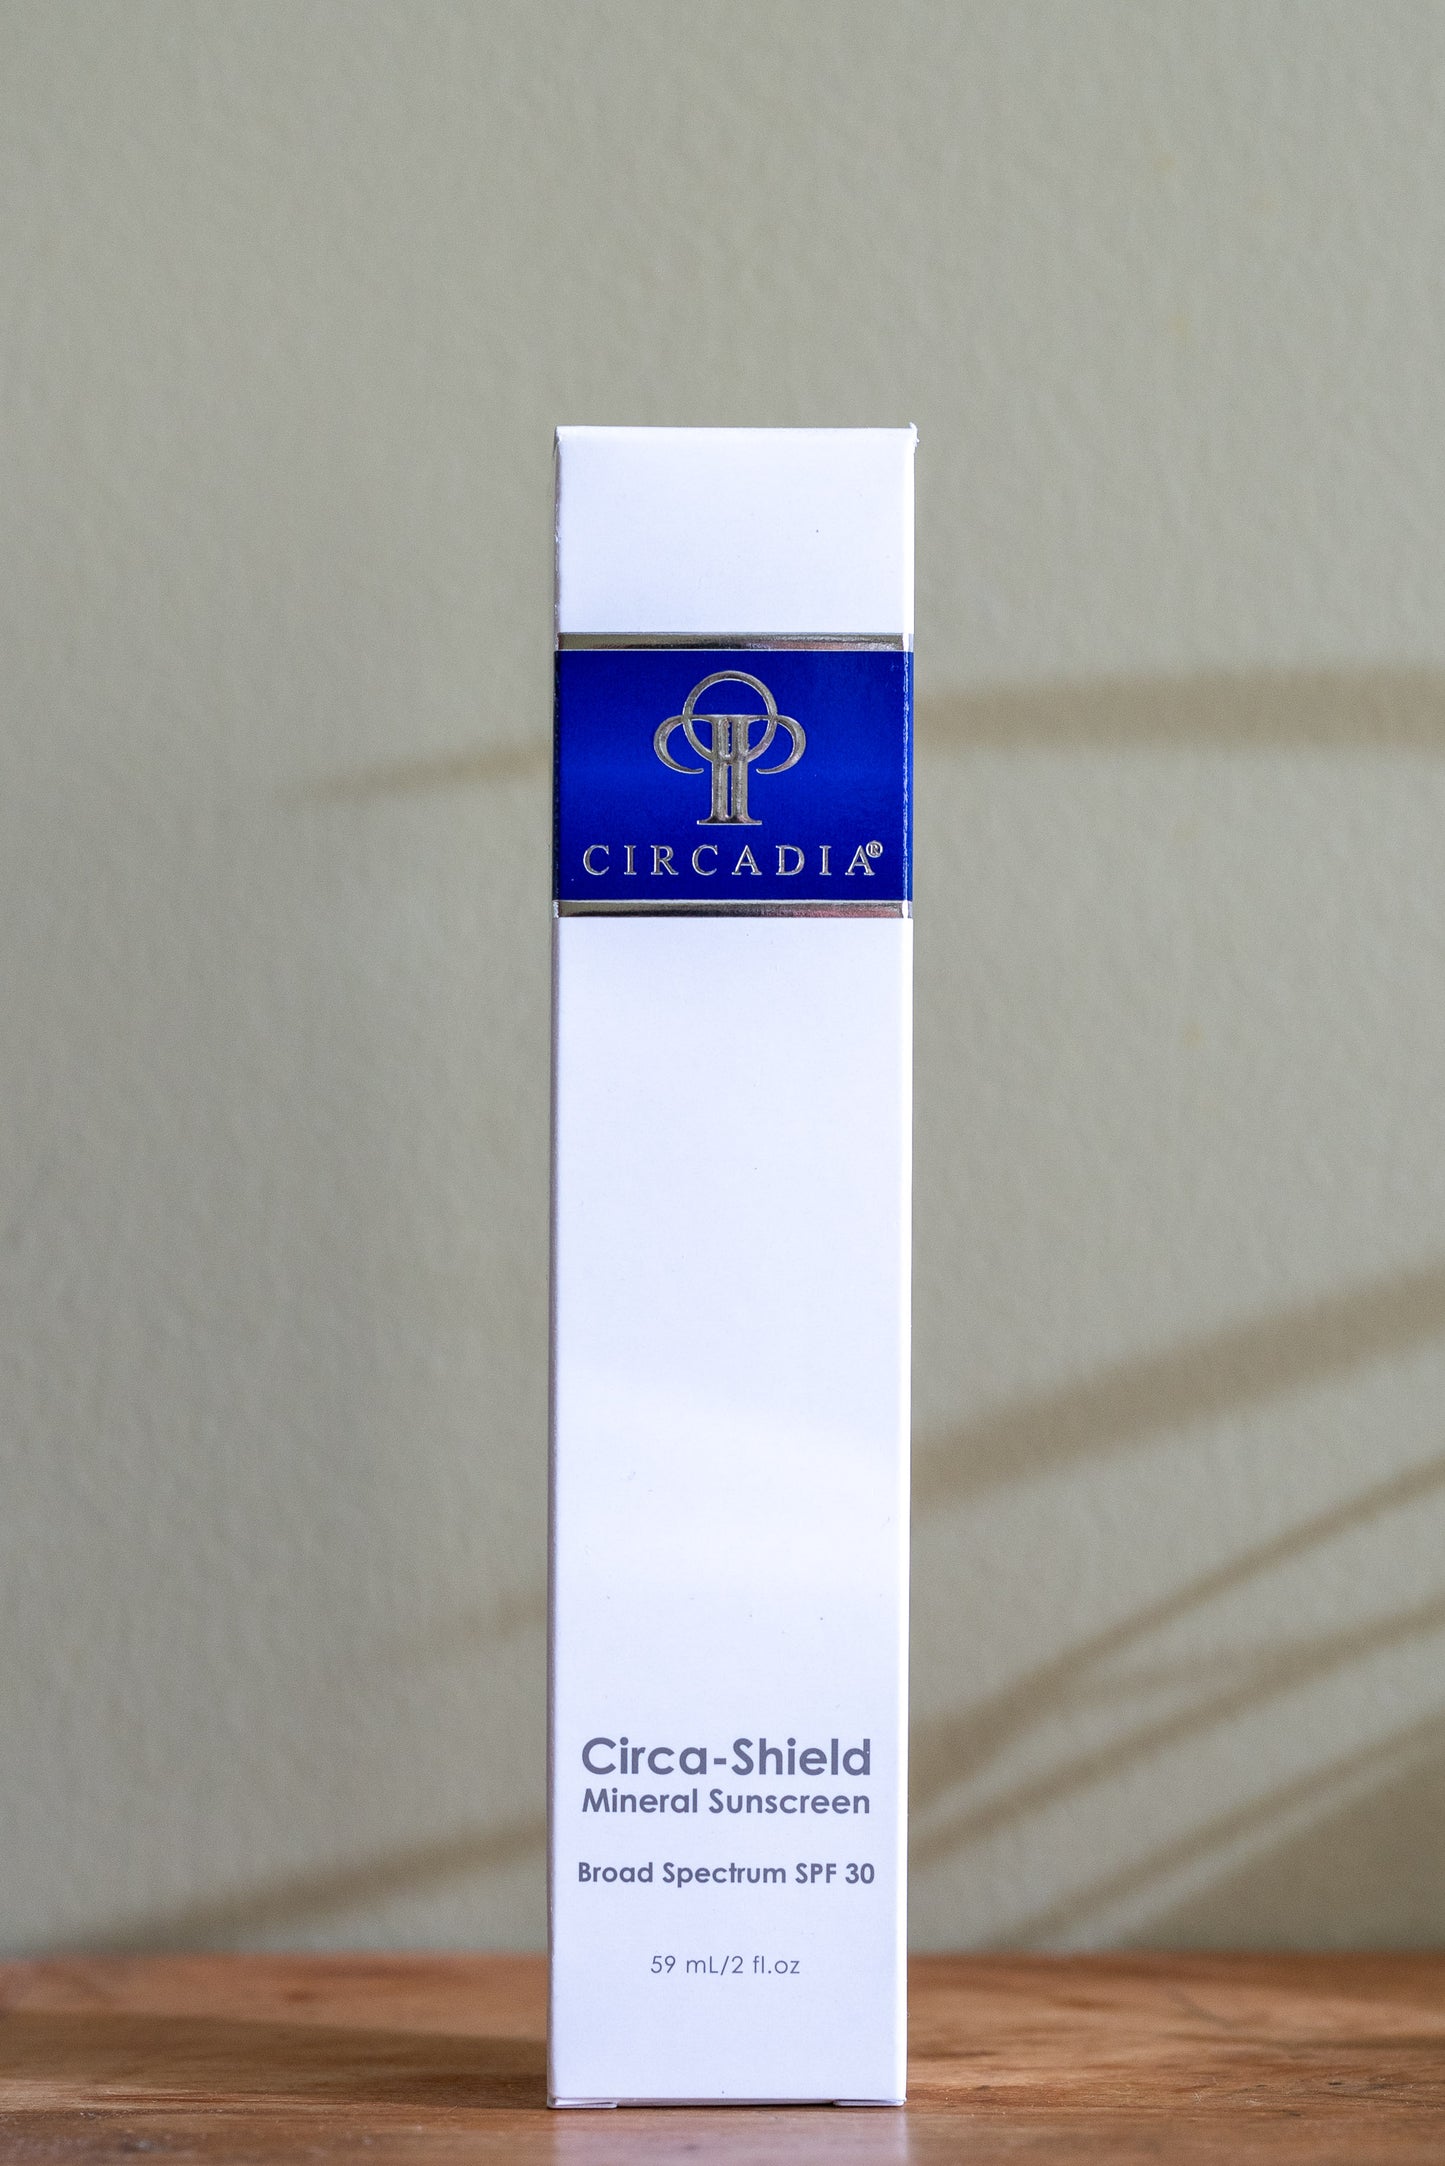 Circadia Circa-Shield Mineral Sunscreen